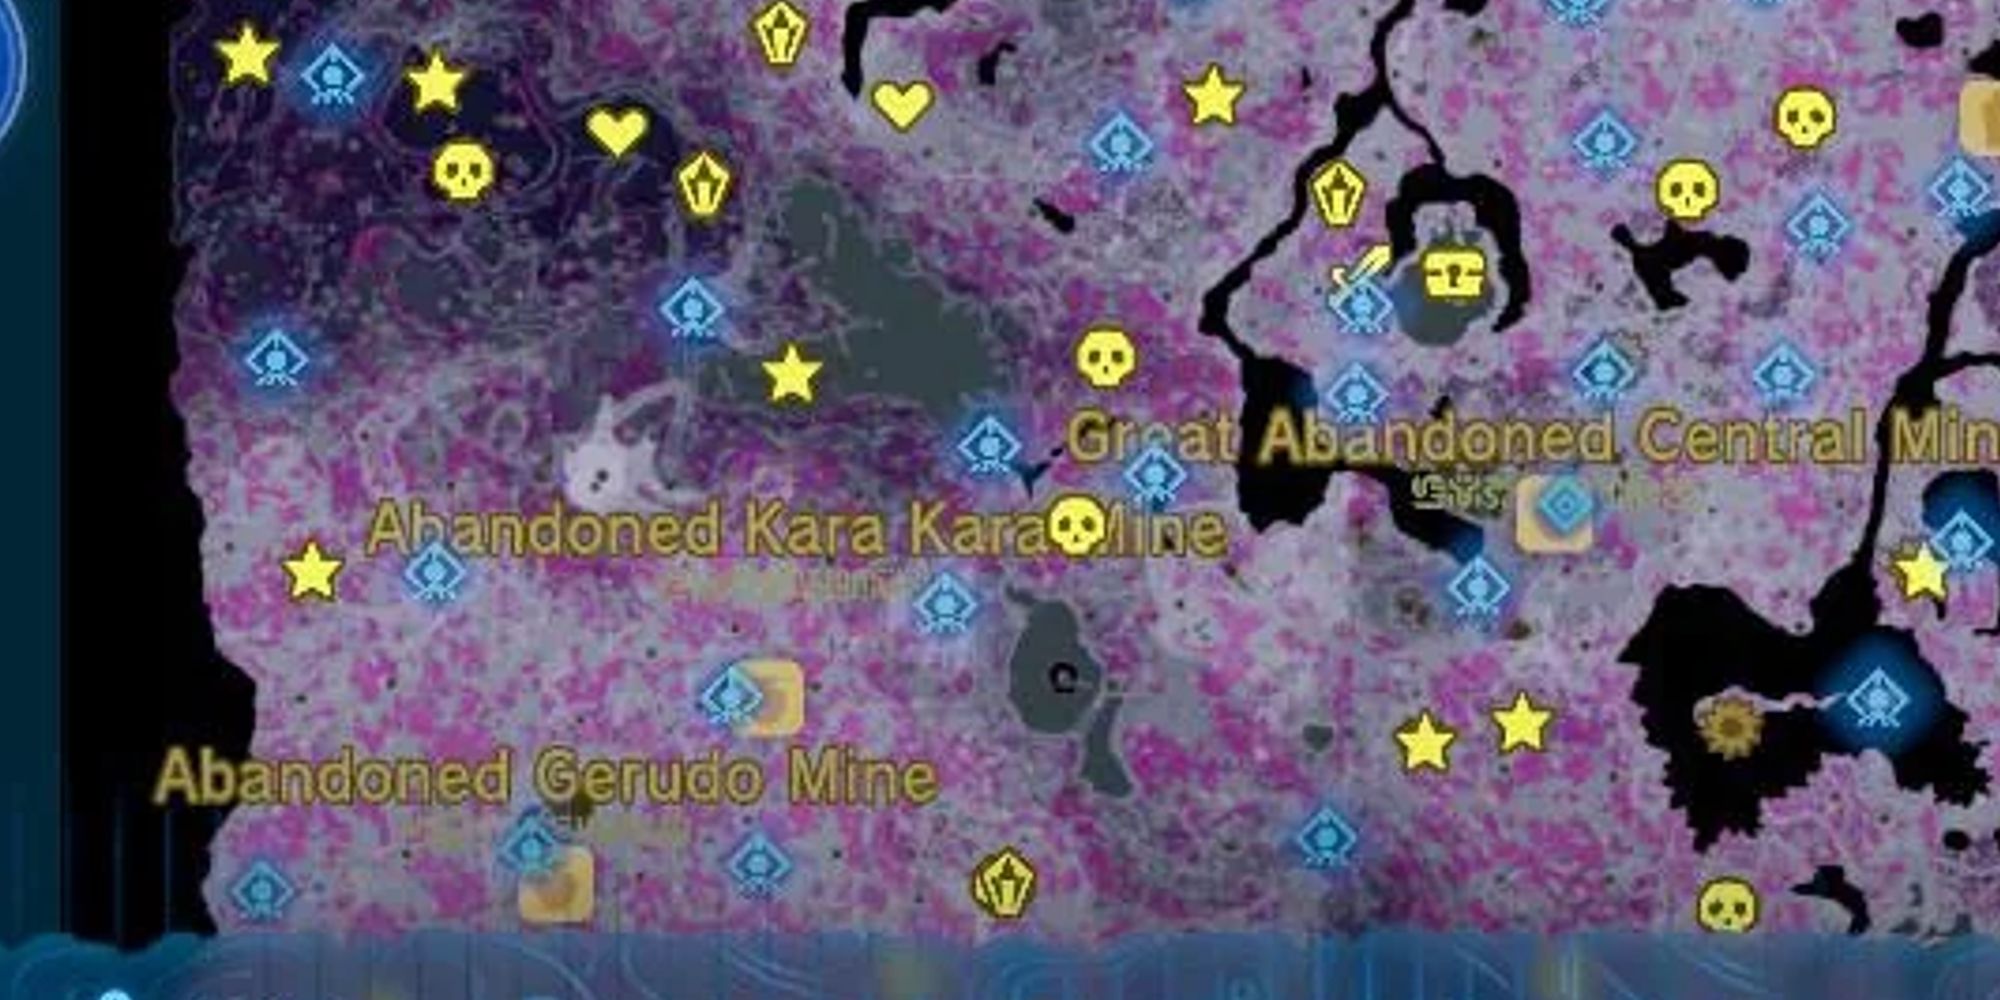 tears of the kingdom gerudo mine on map, also showing the kara kara mine and great mine